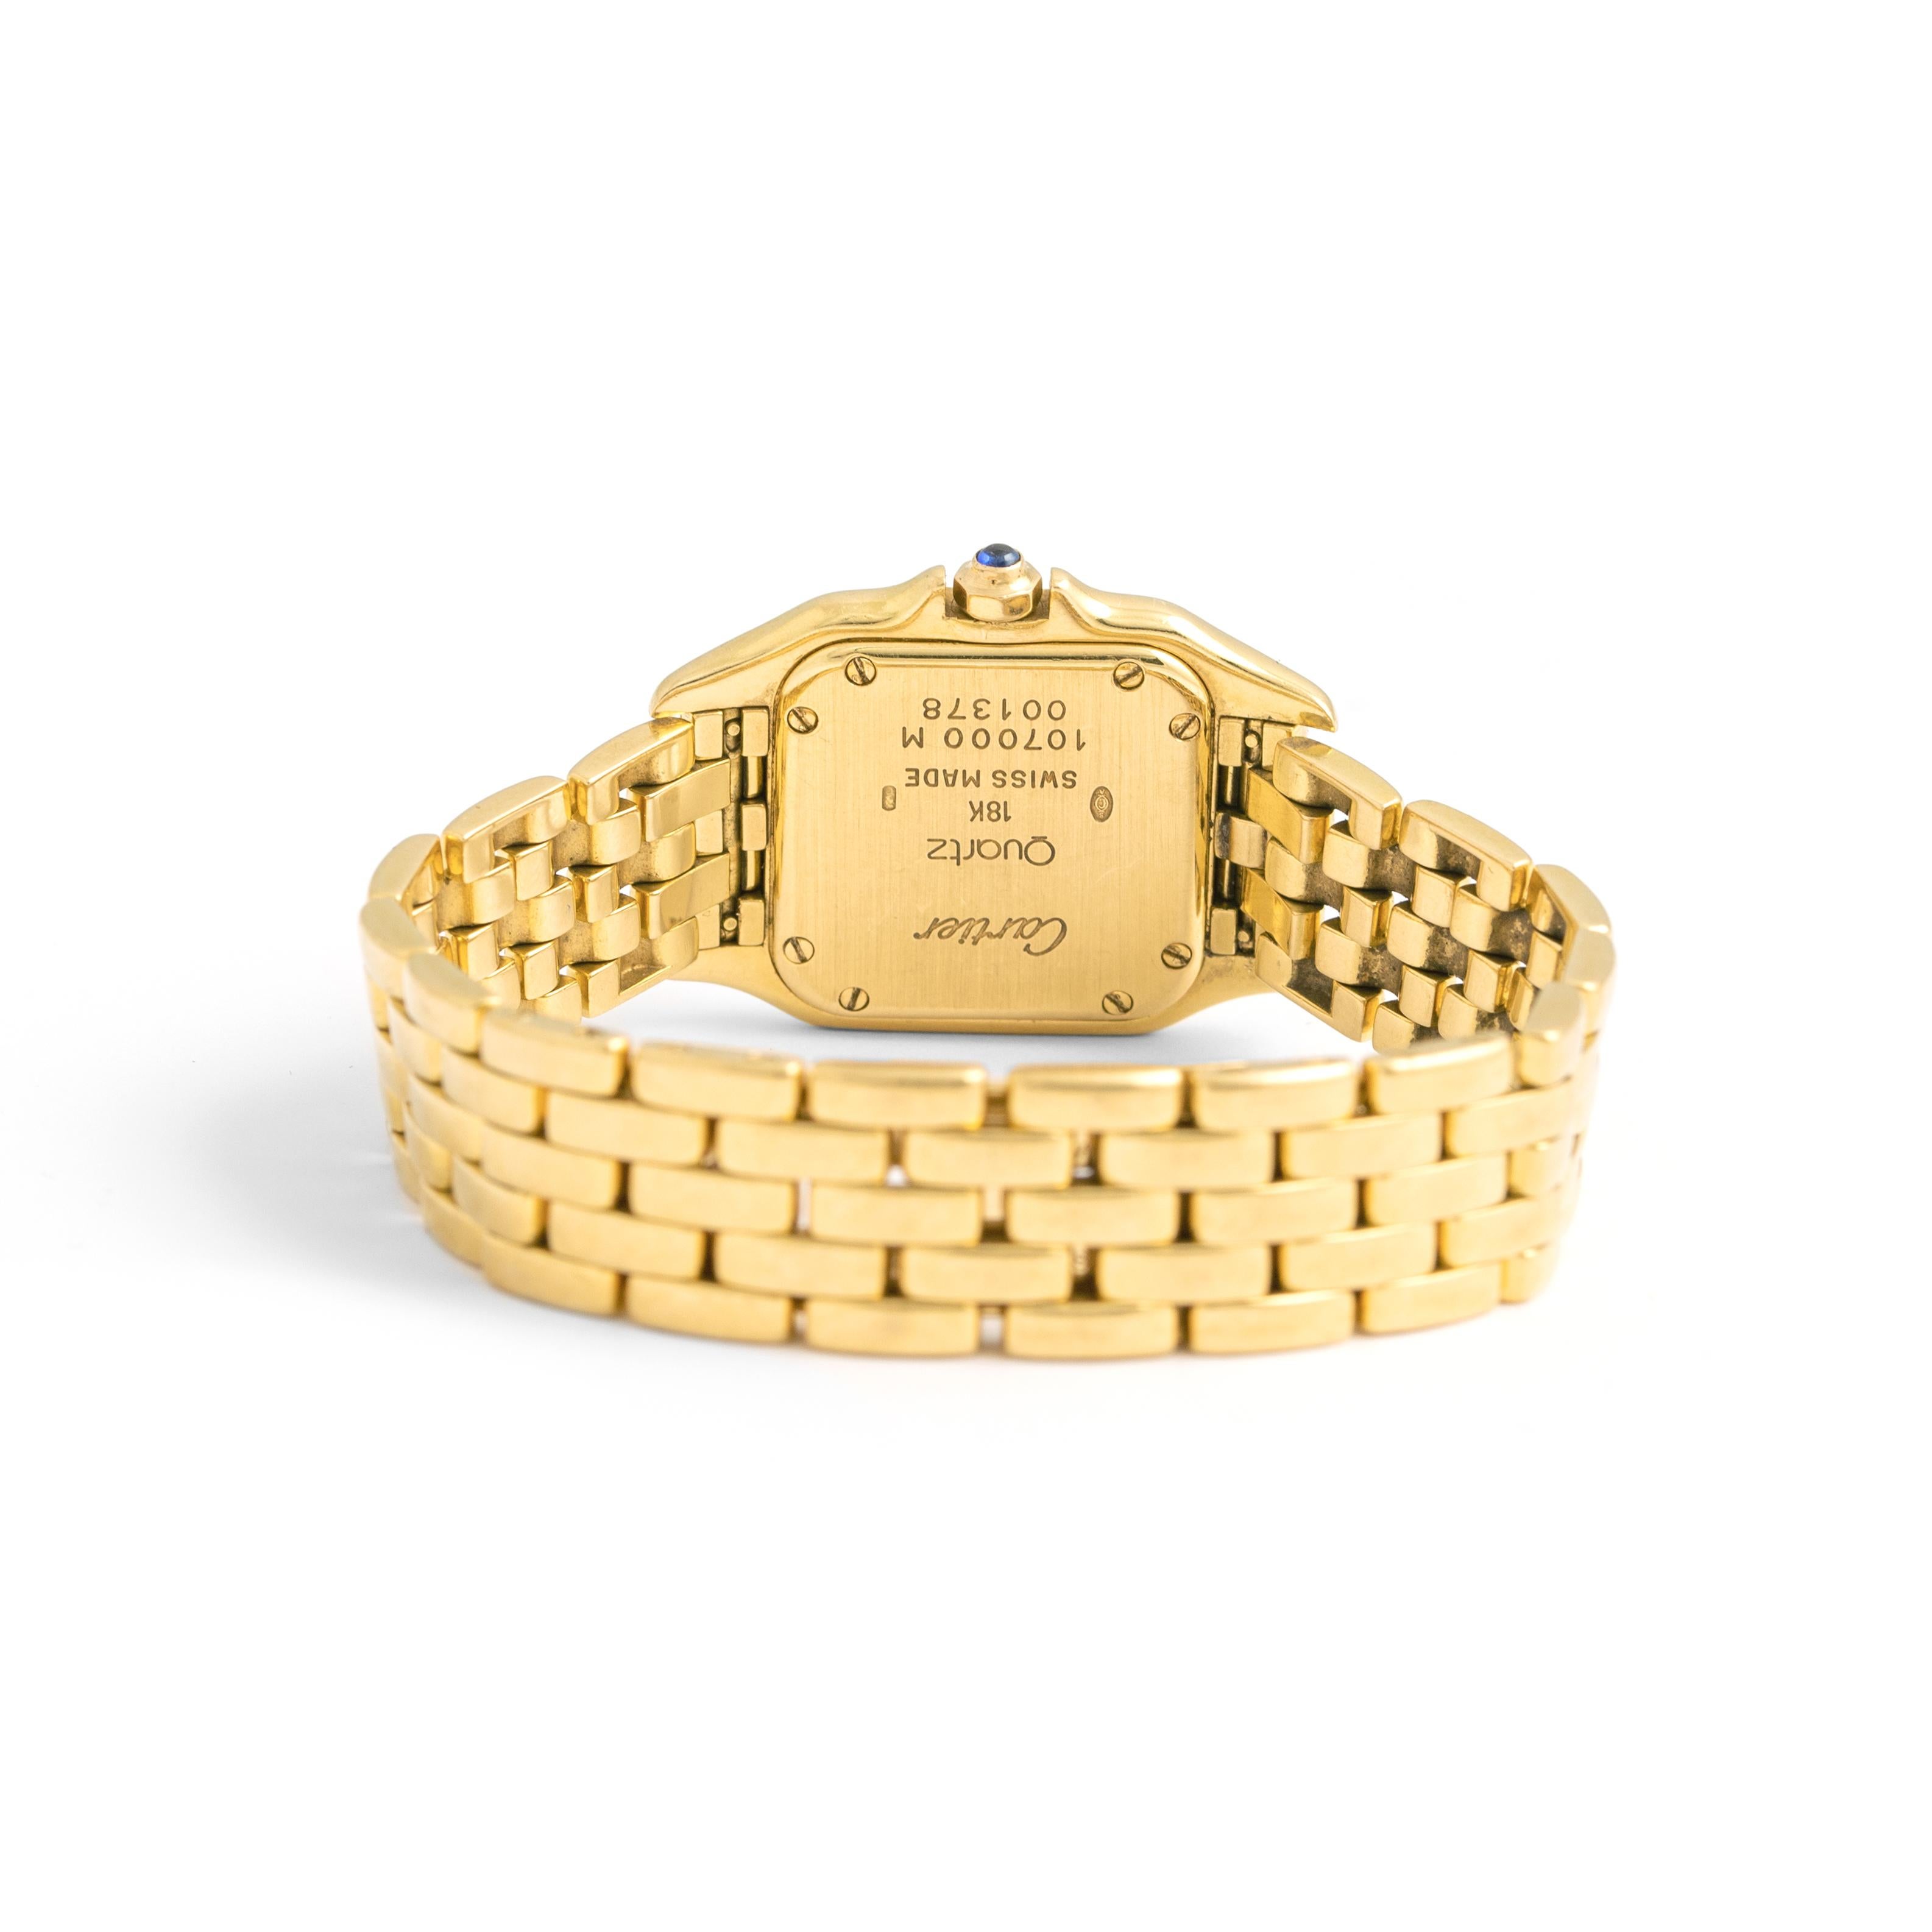 Cartier Panthere Yellow Gold 18k Wristwatch 4